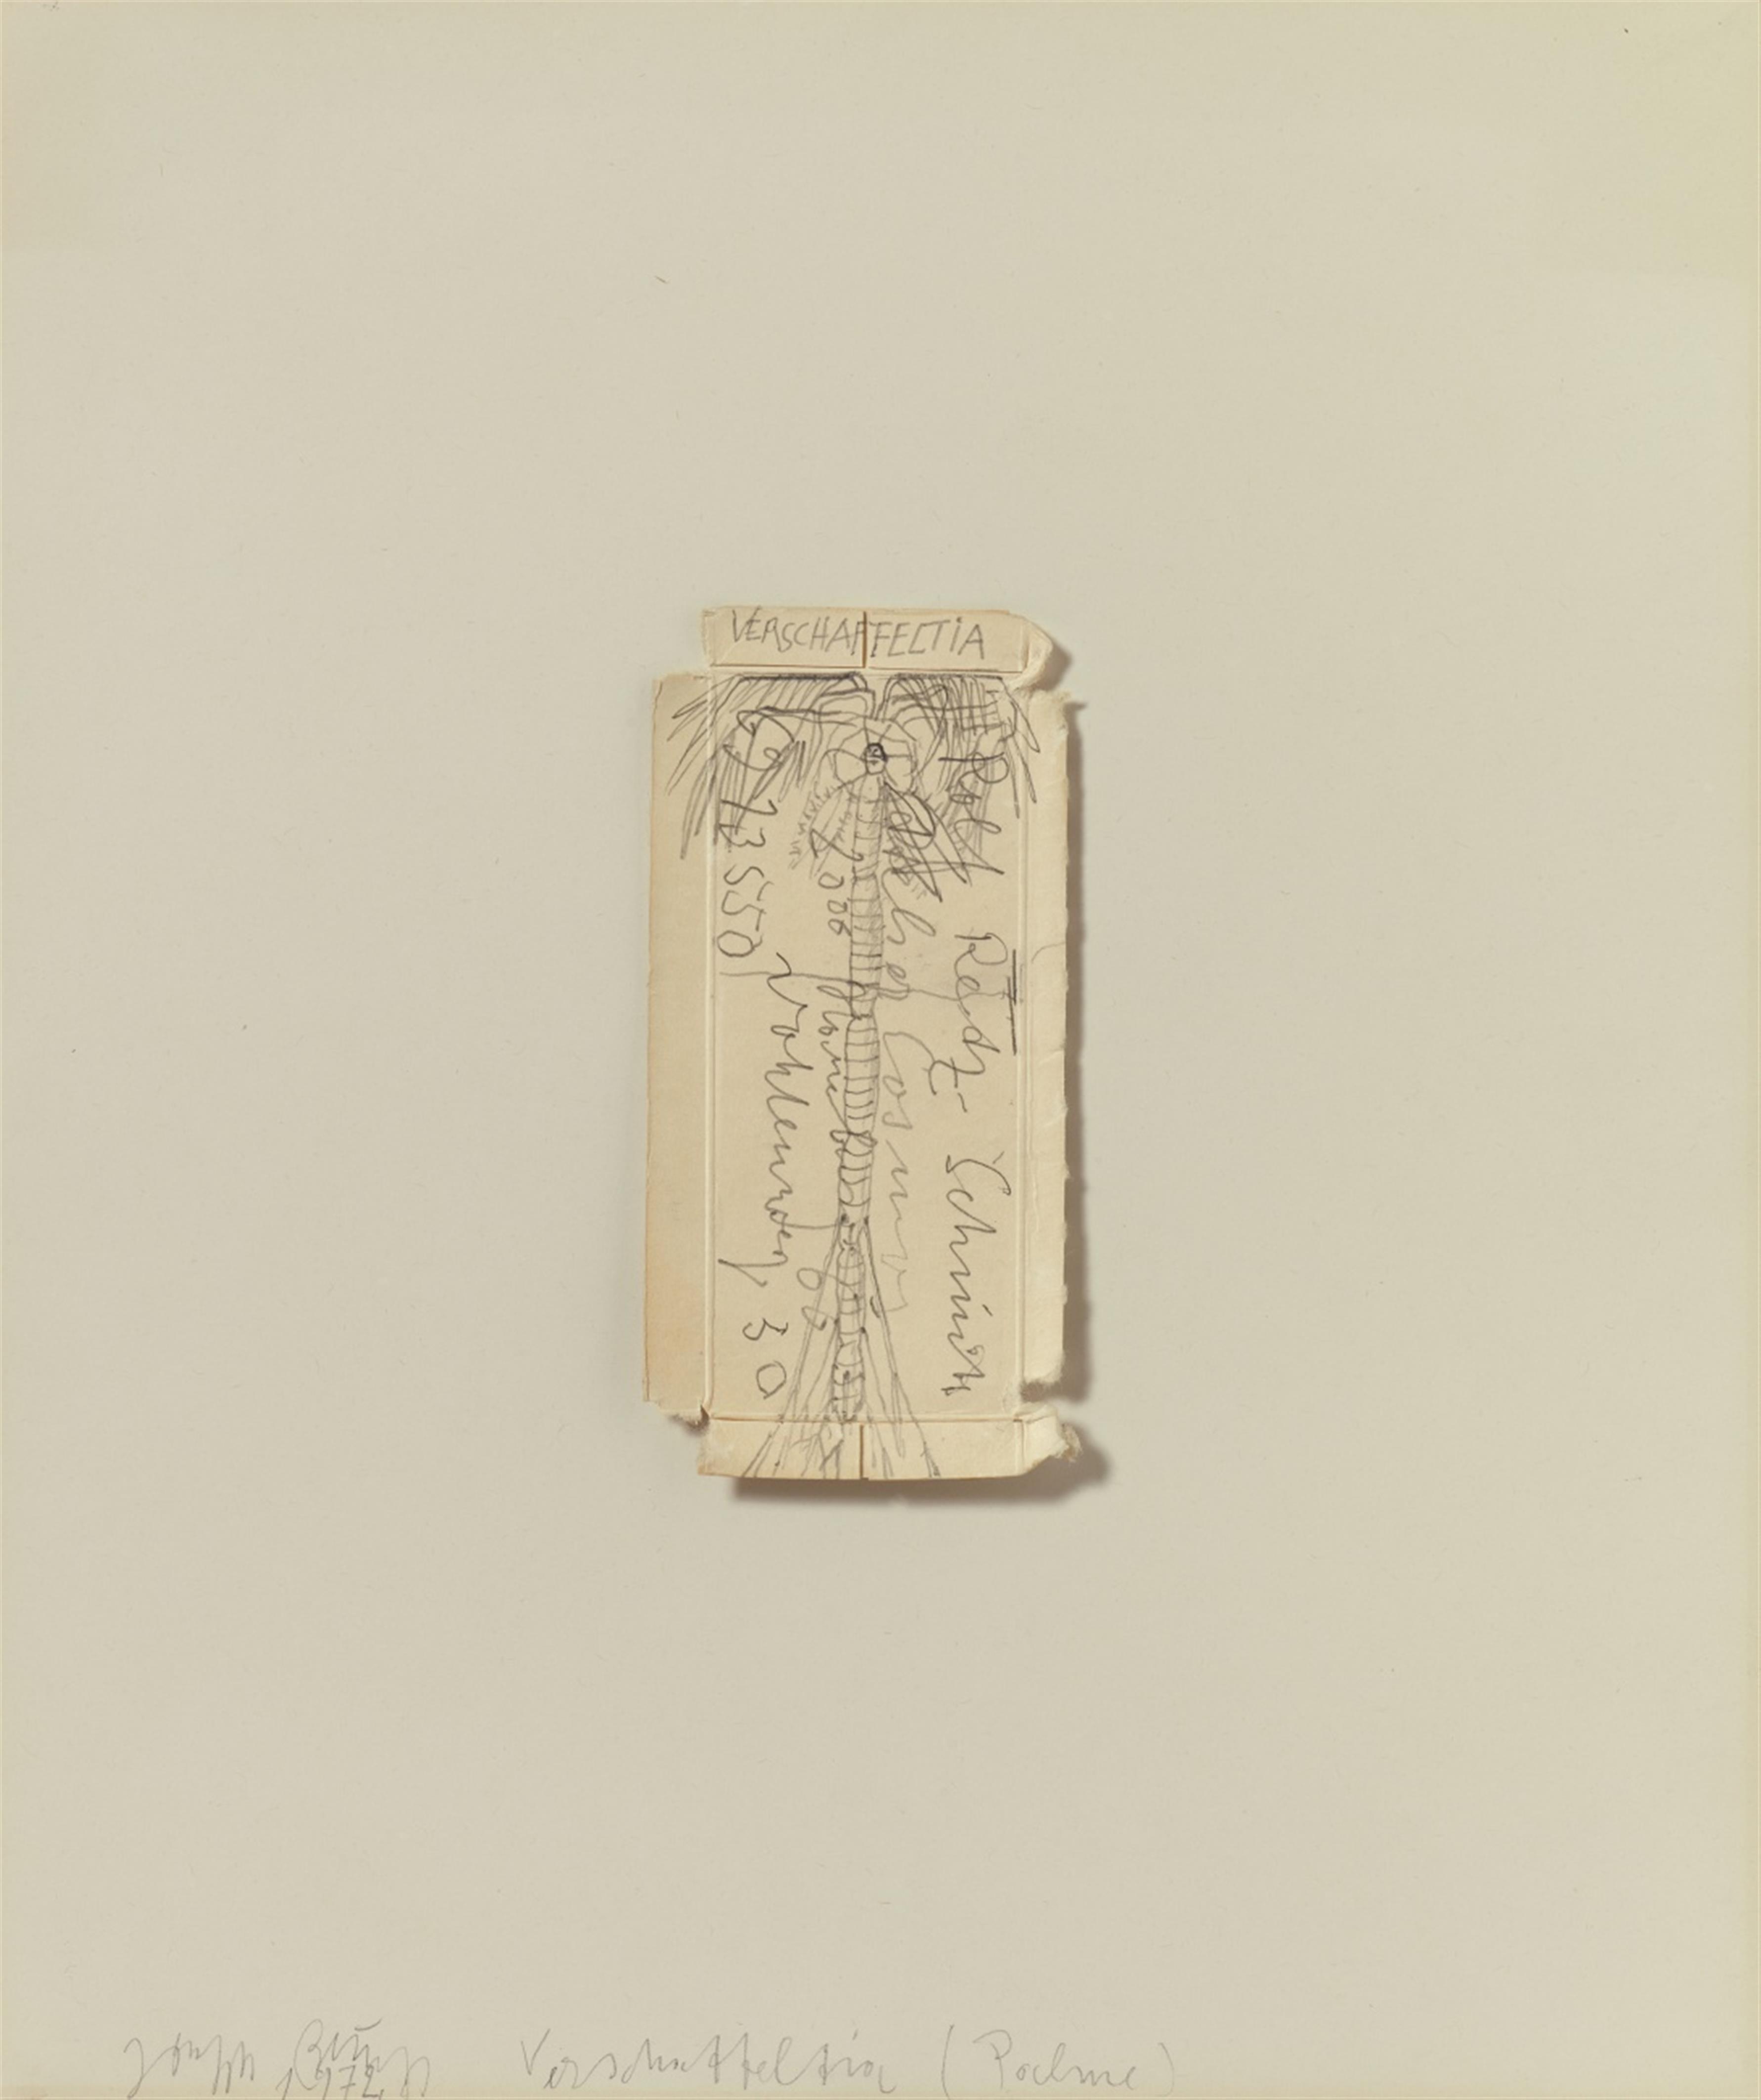 Joseph Beuys - Verschaffeltia (Palme) - image-1